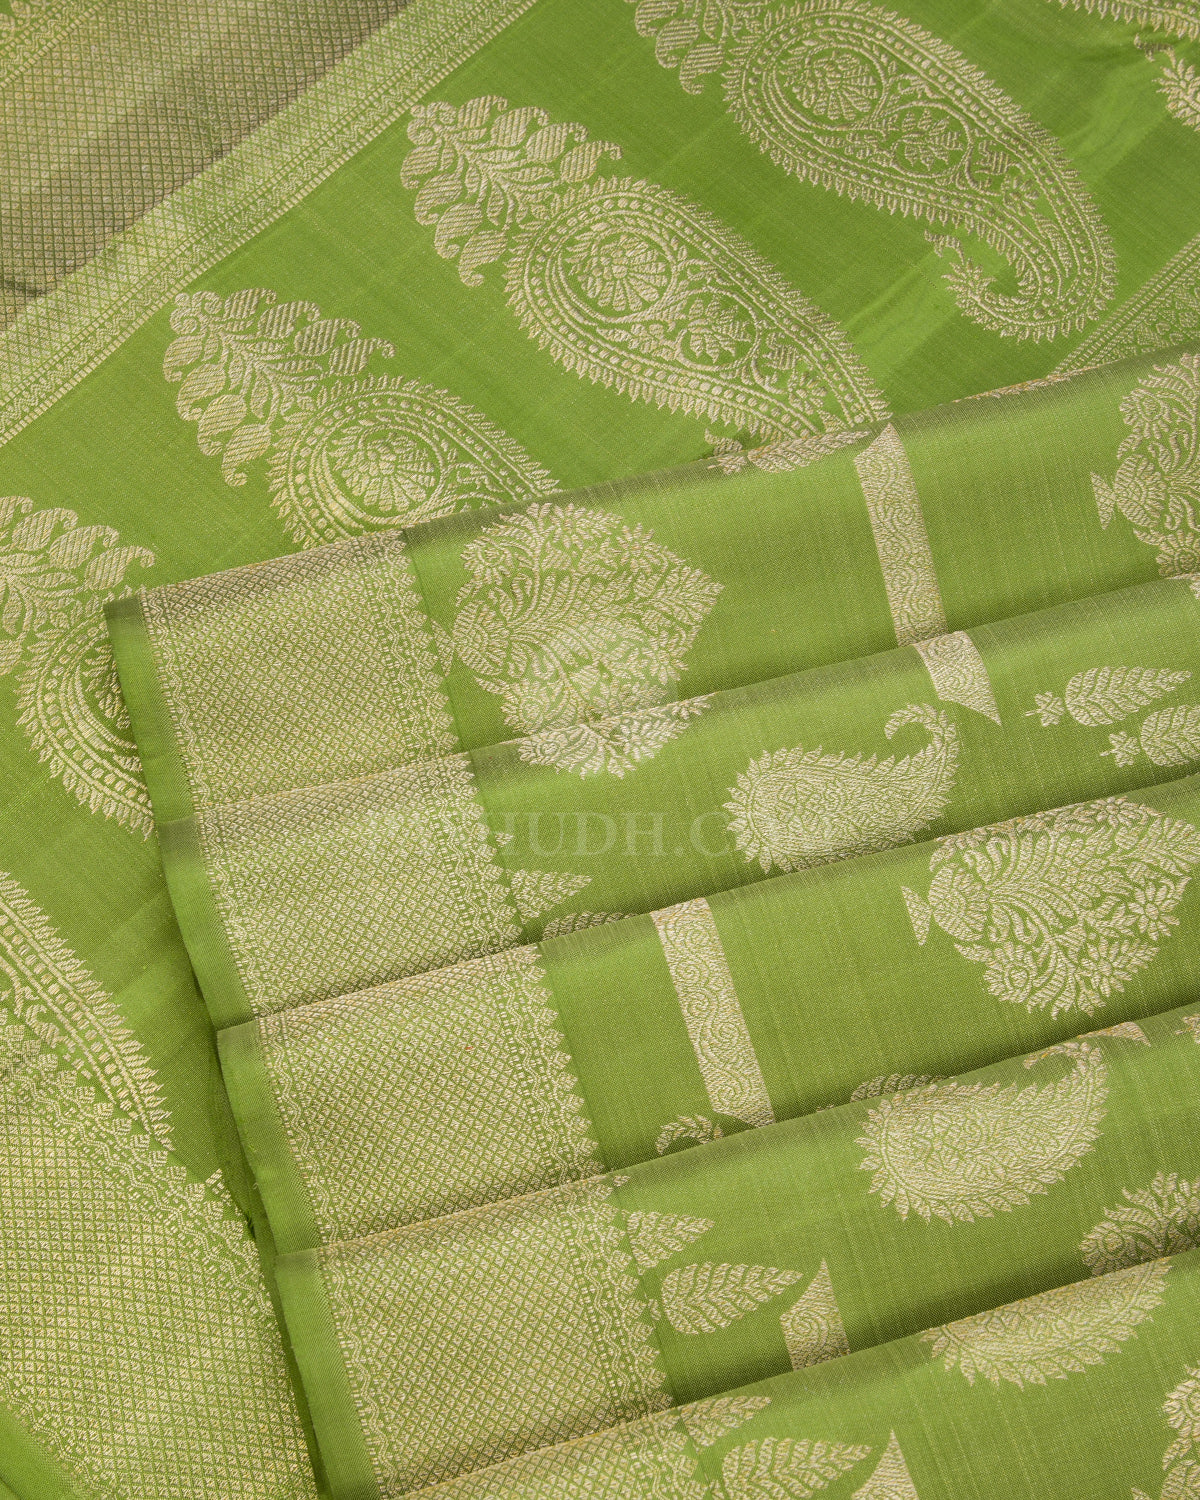 Pear Green Kanjivaram Silk Saree - S850 - View 5